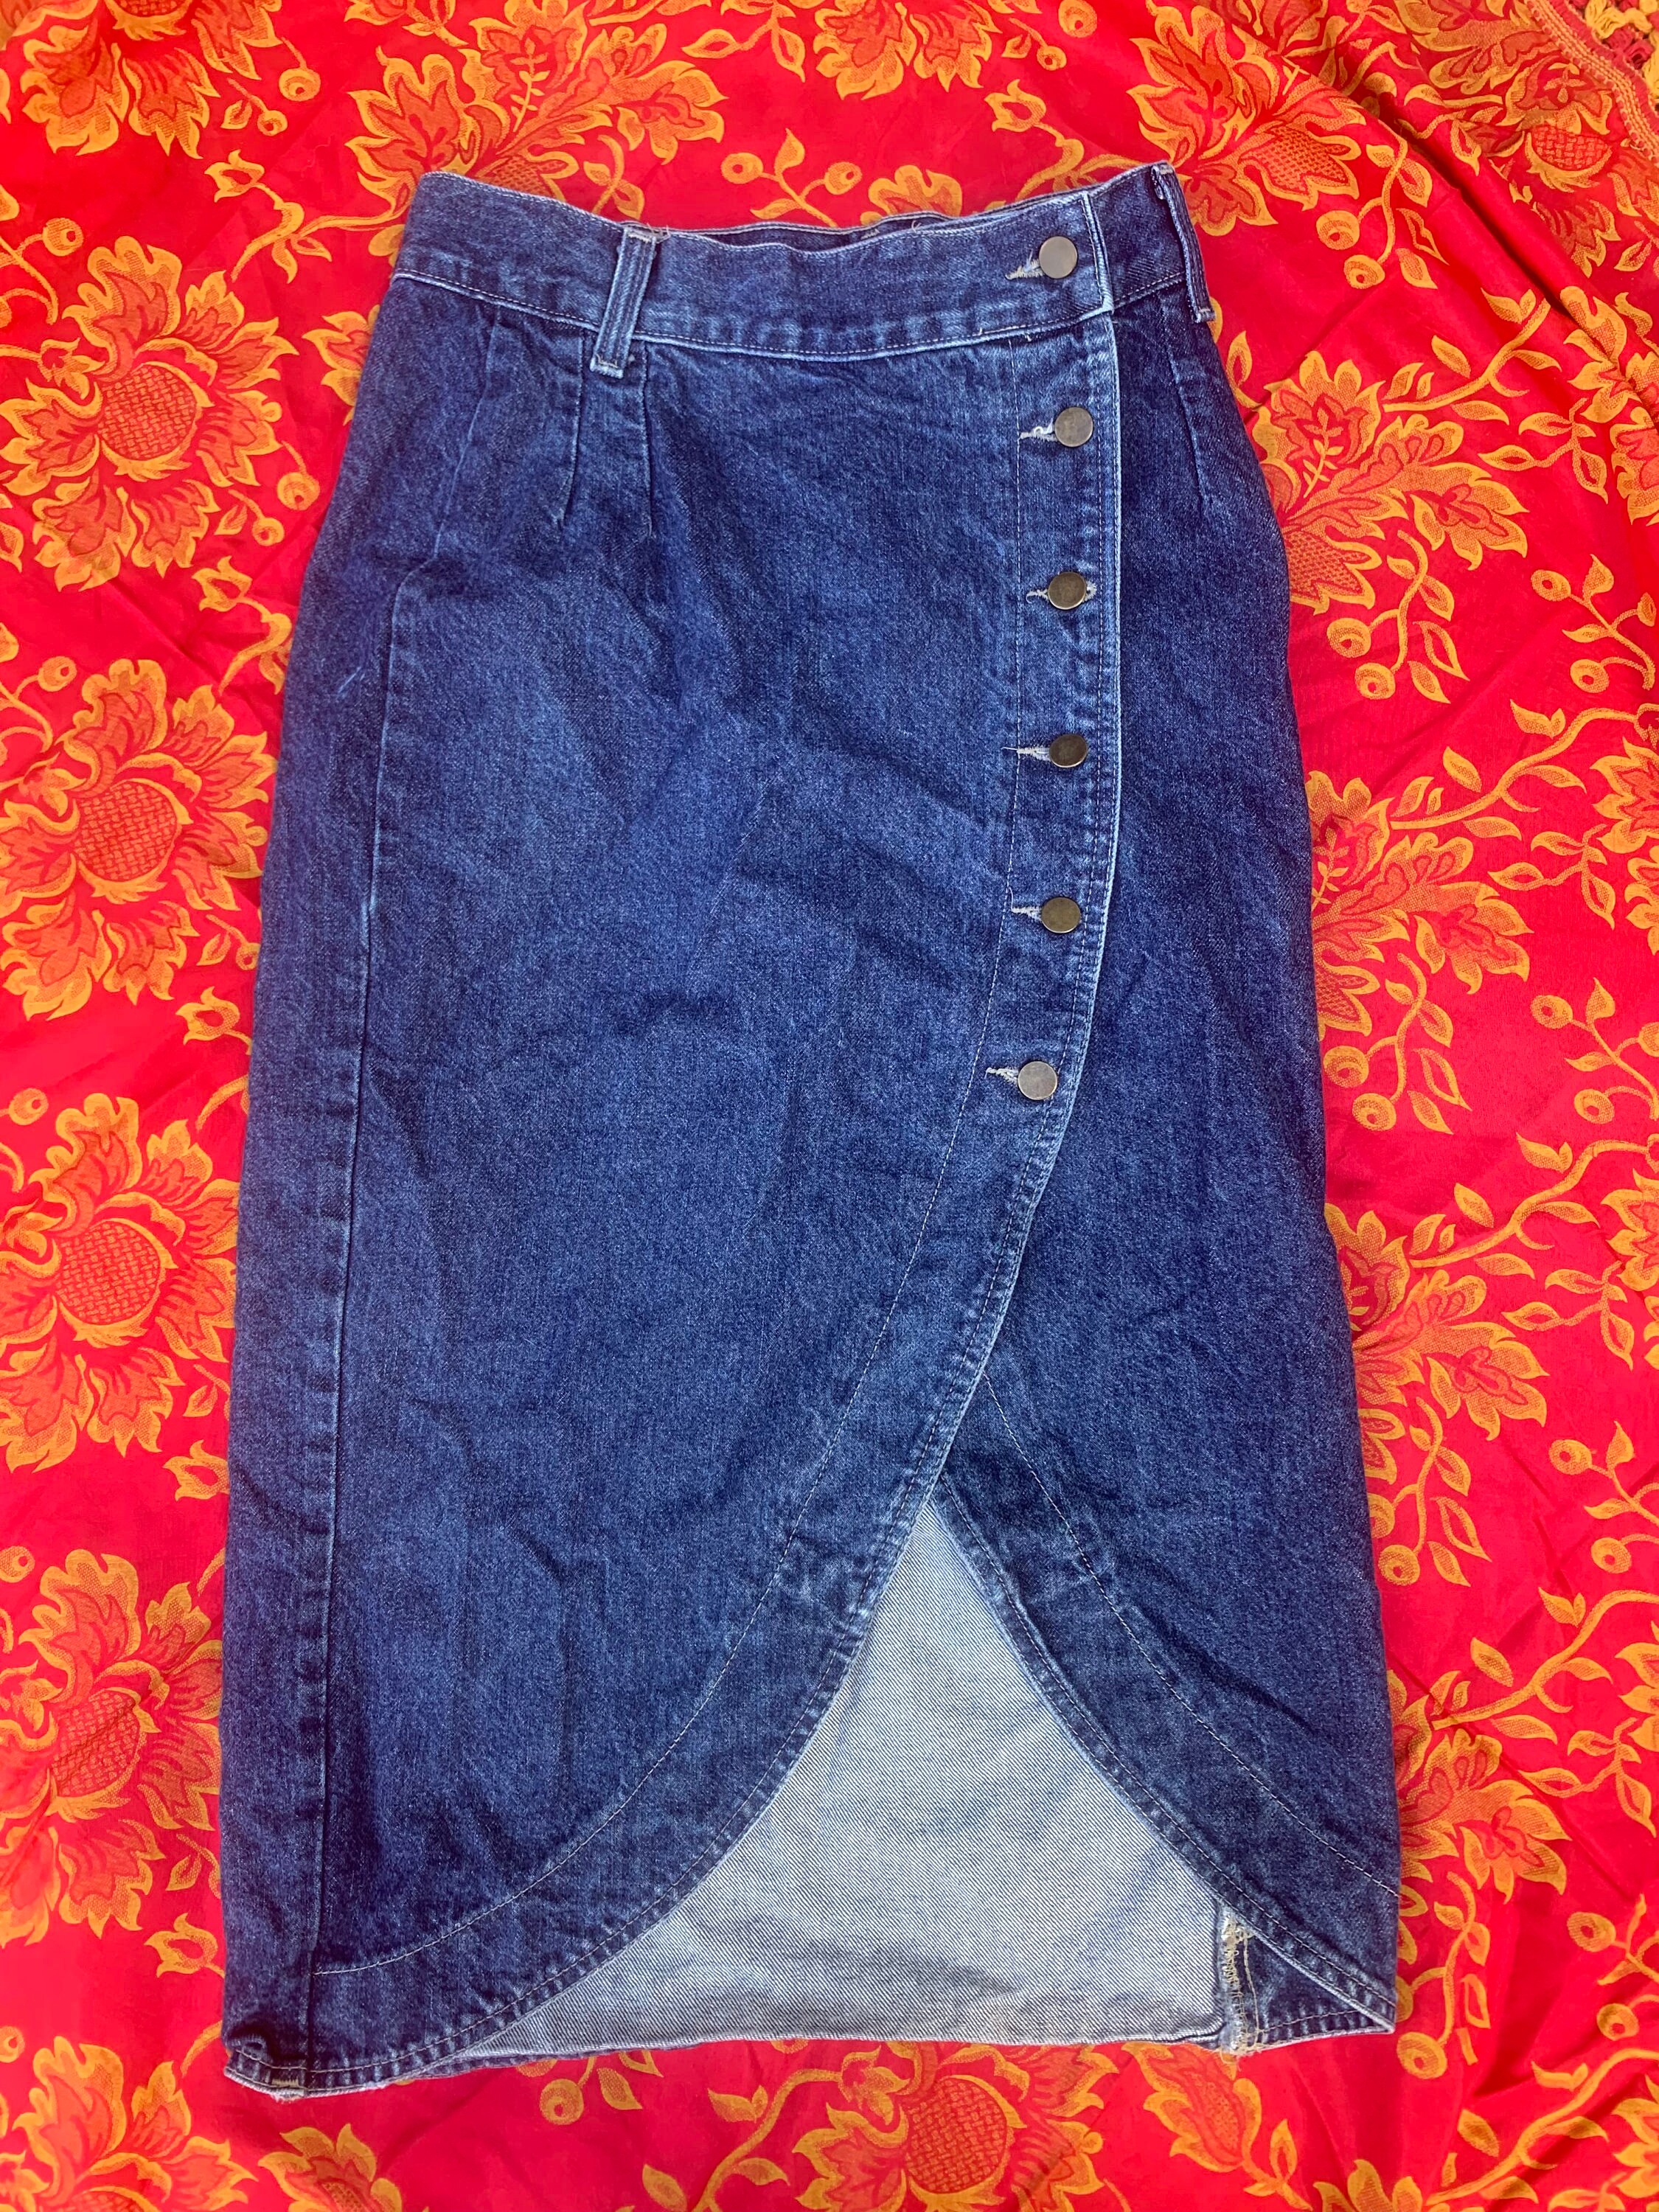 Denim Thigh Length Ladies Plain Blue Skirt Dungaree at Rs 960